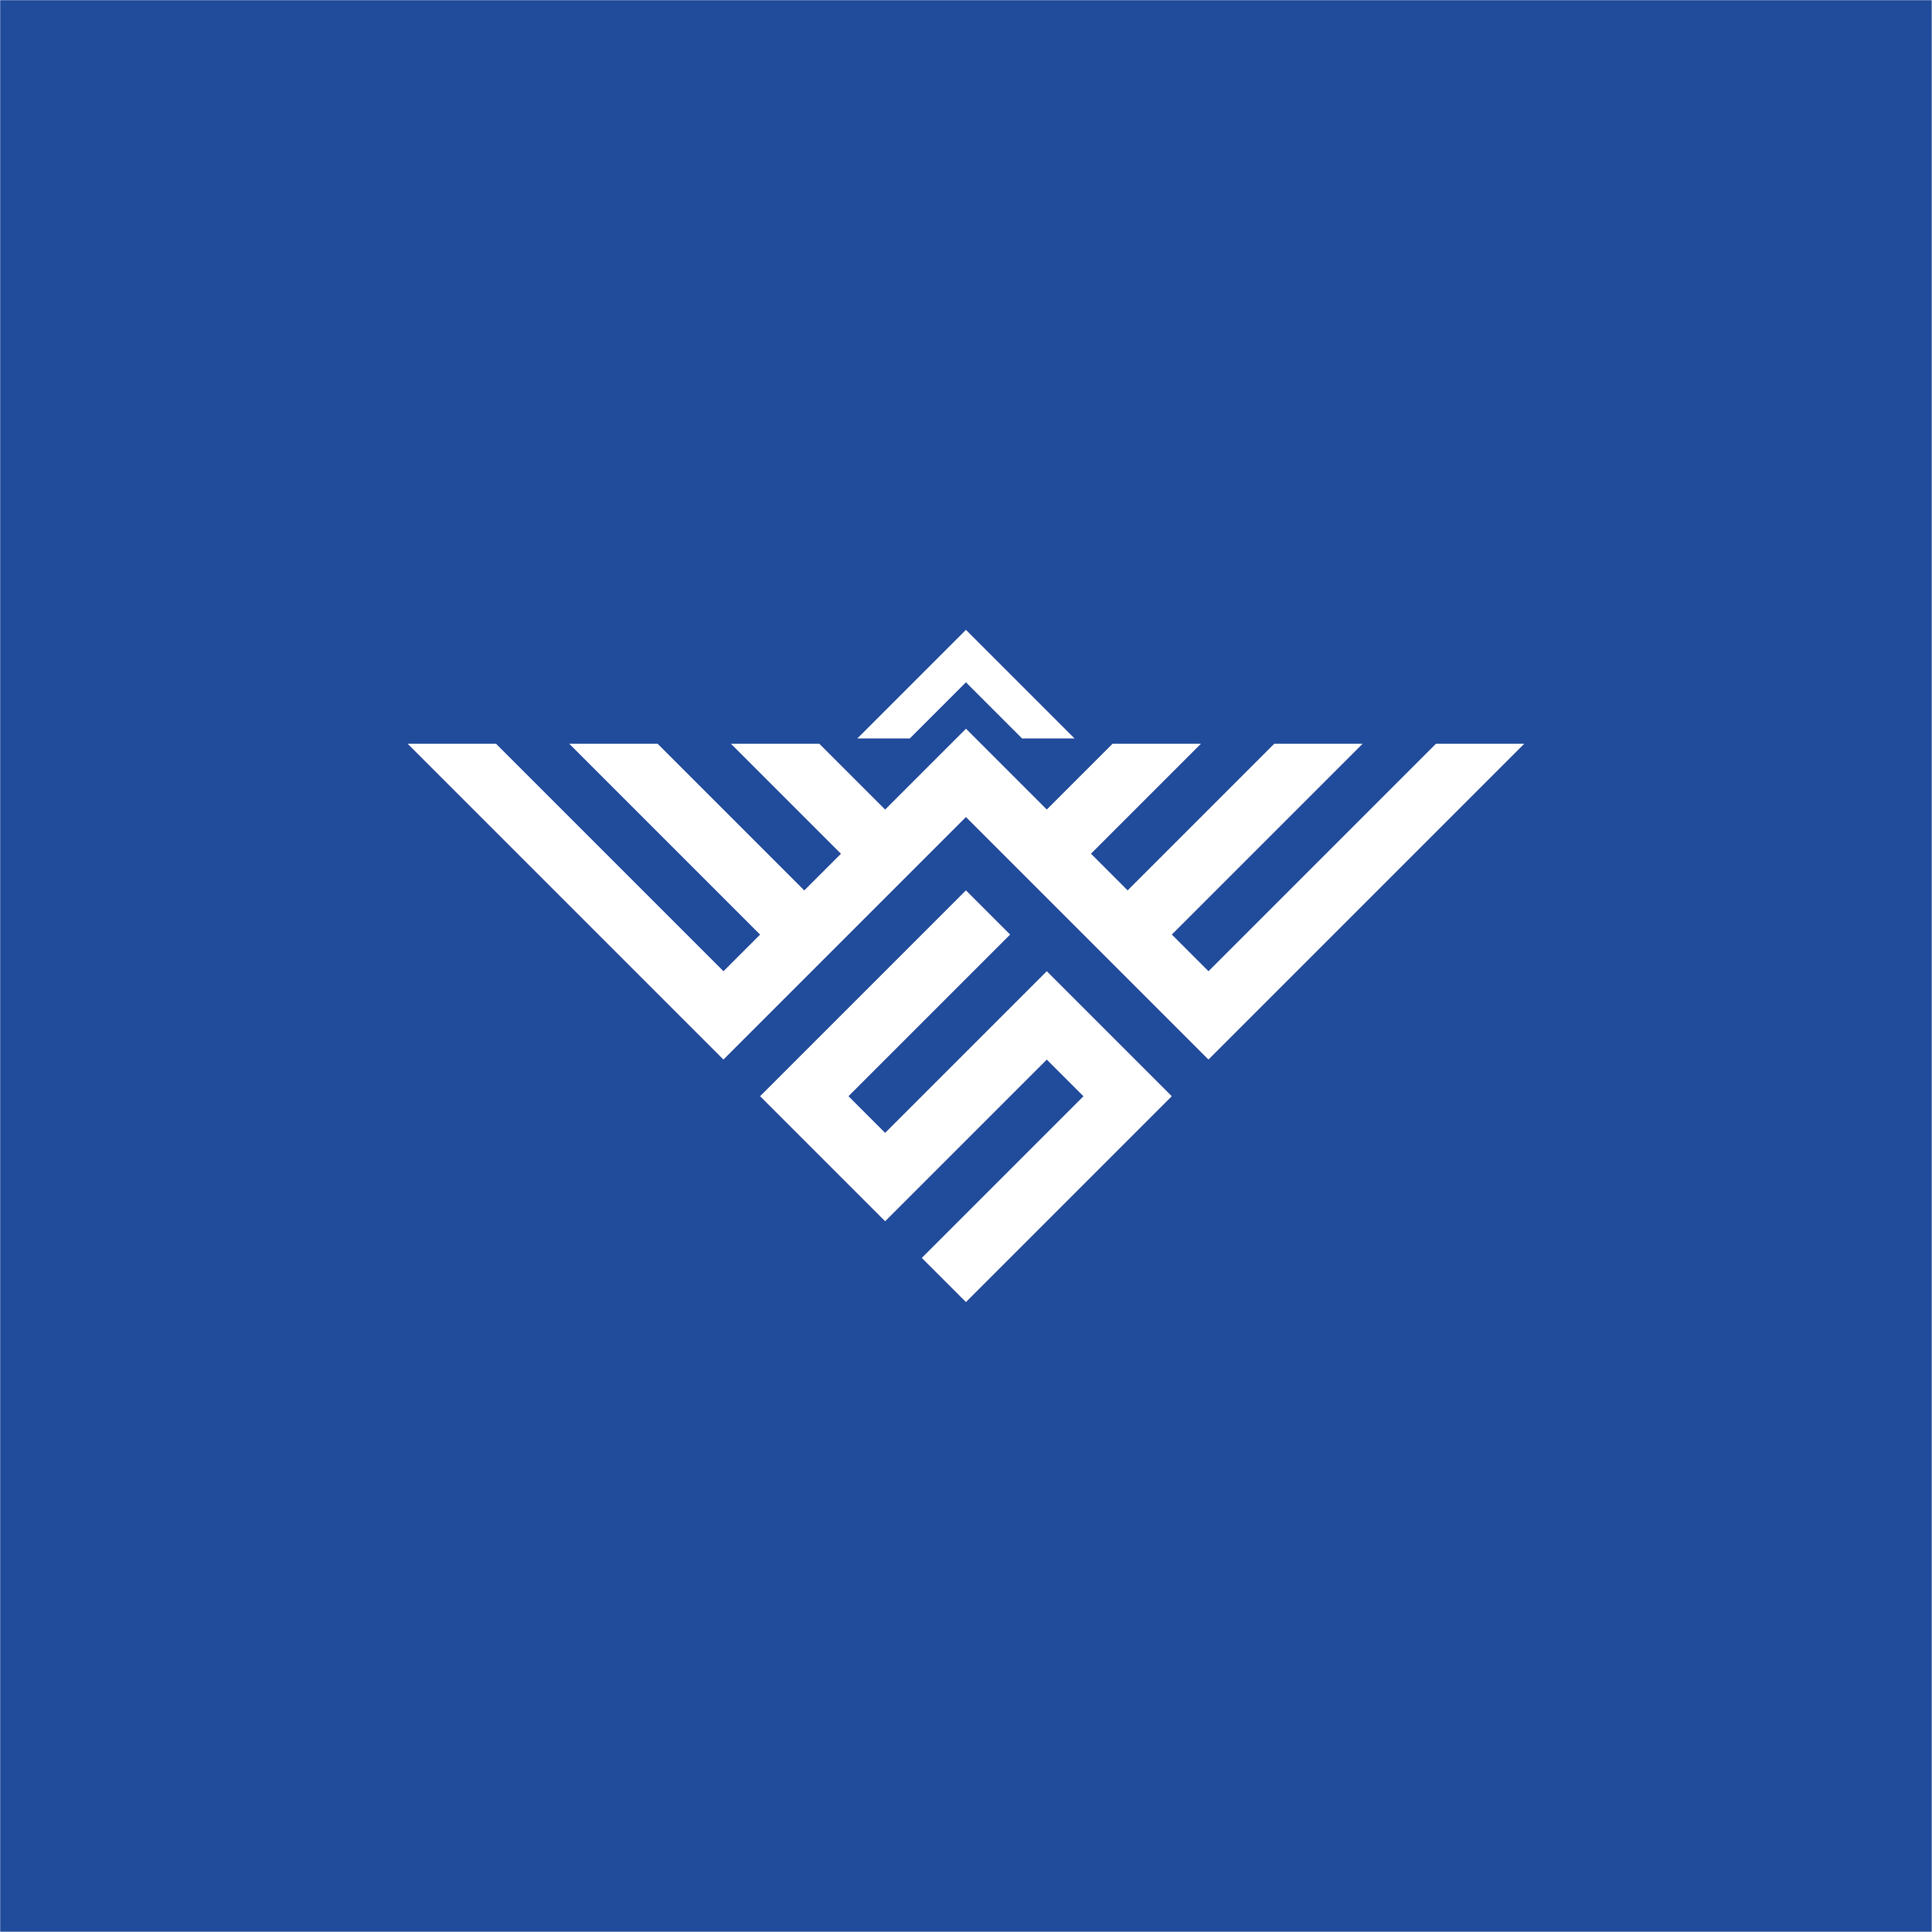 Monogram logo design cover image.